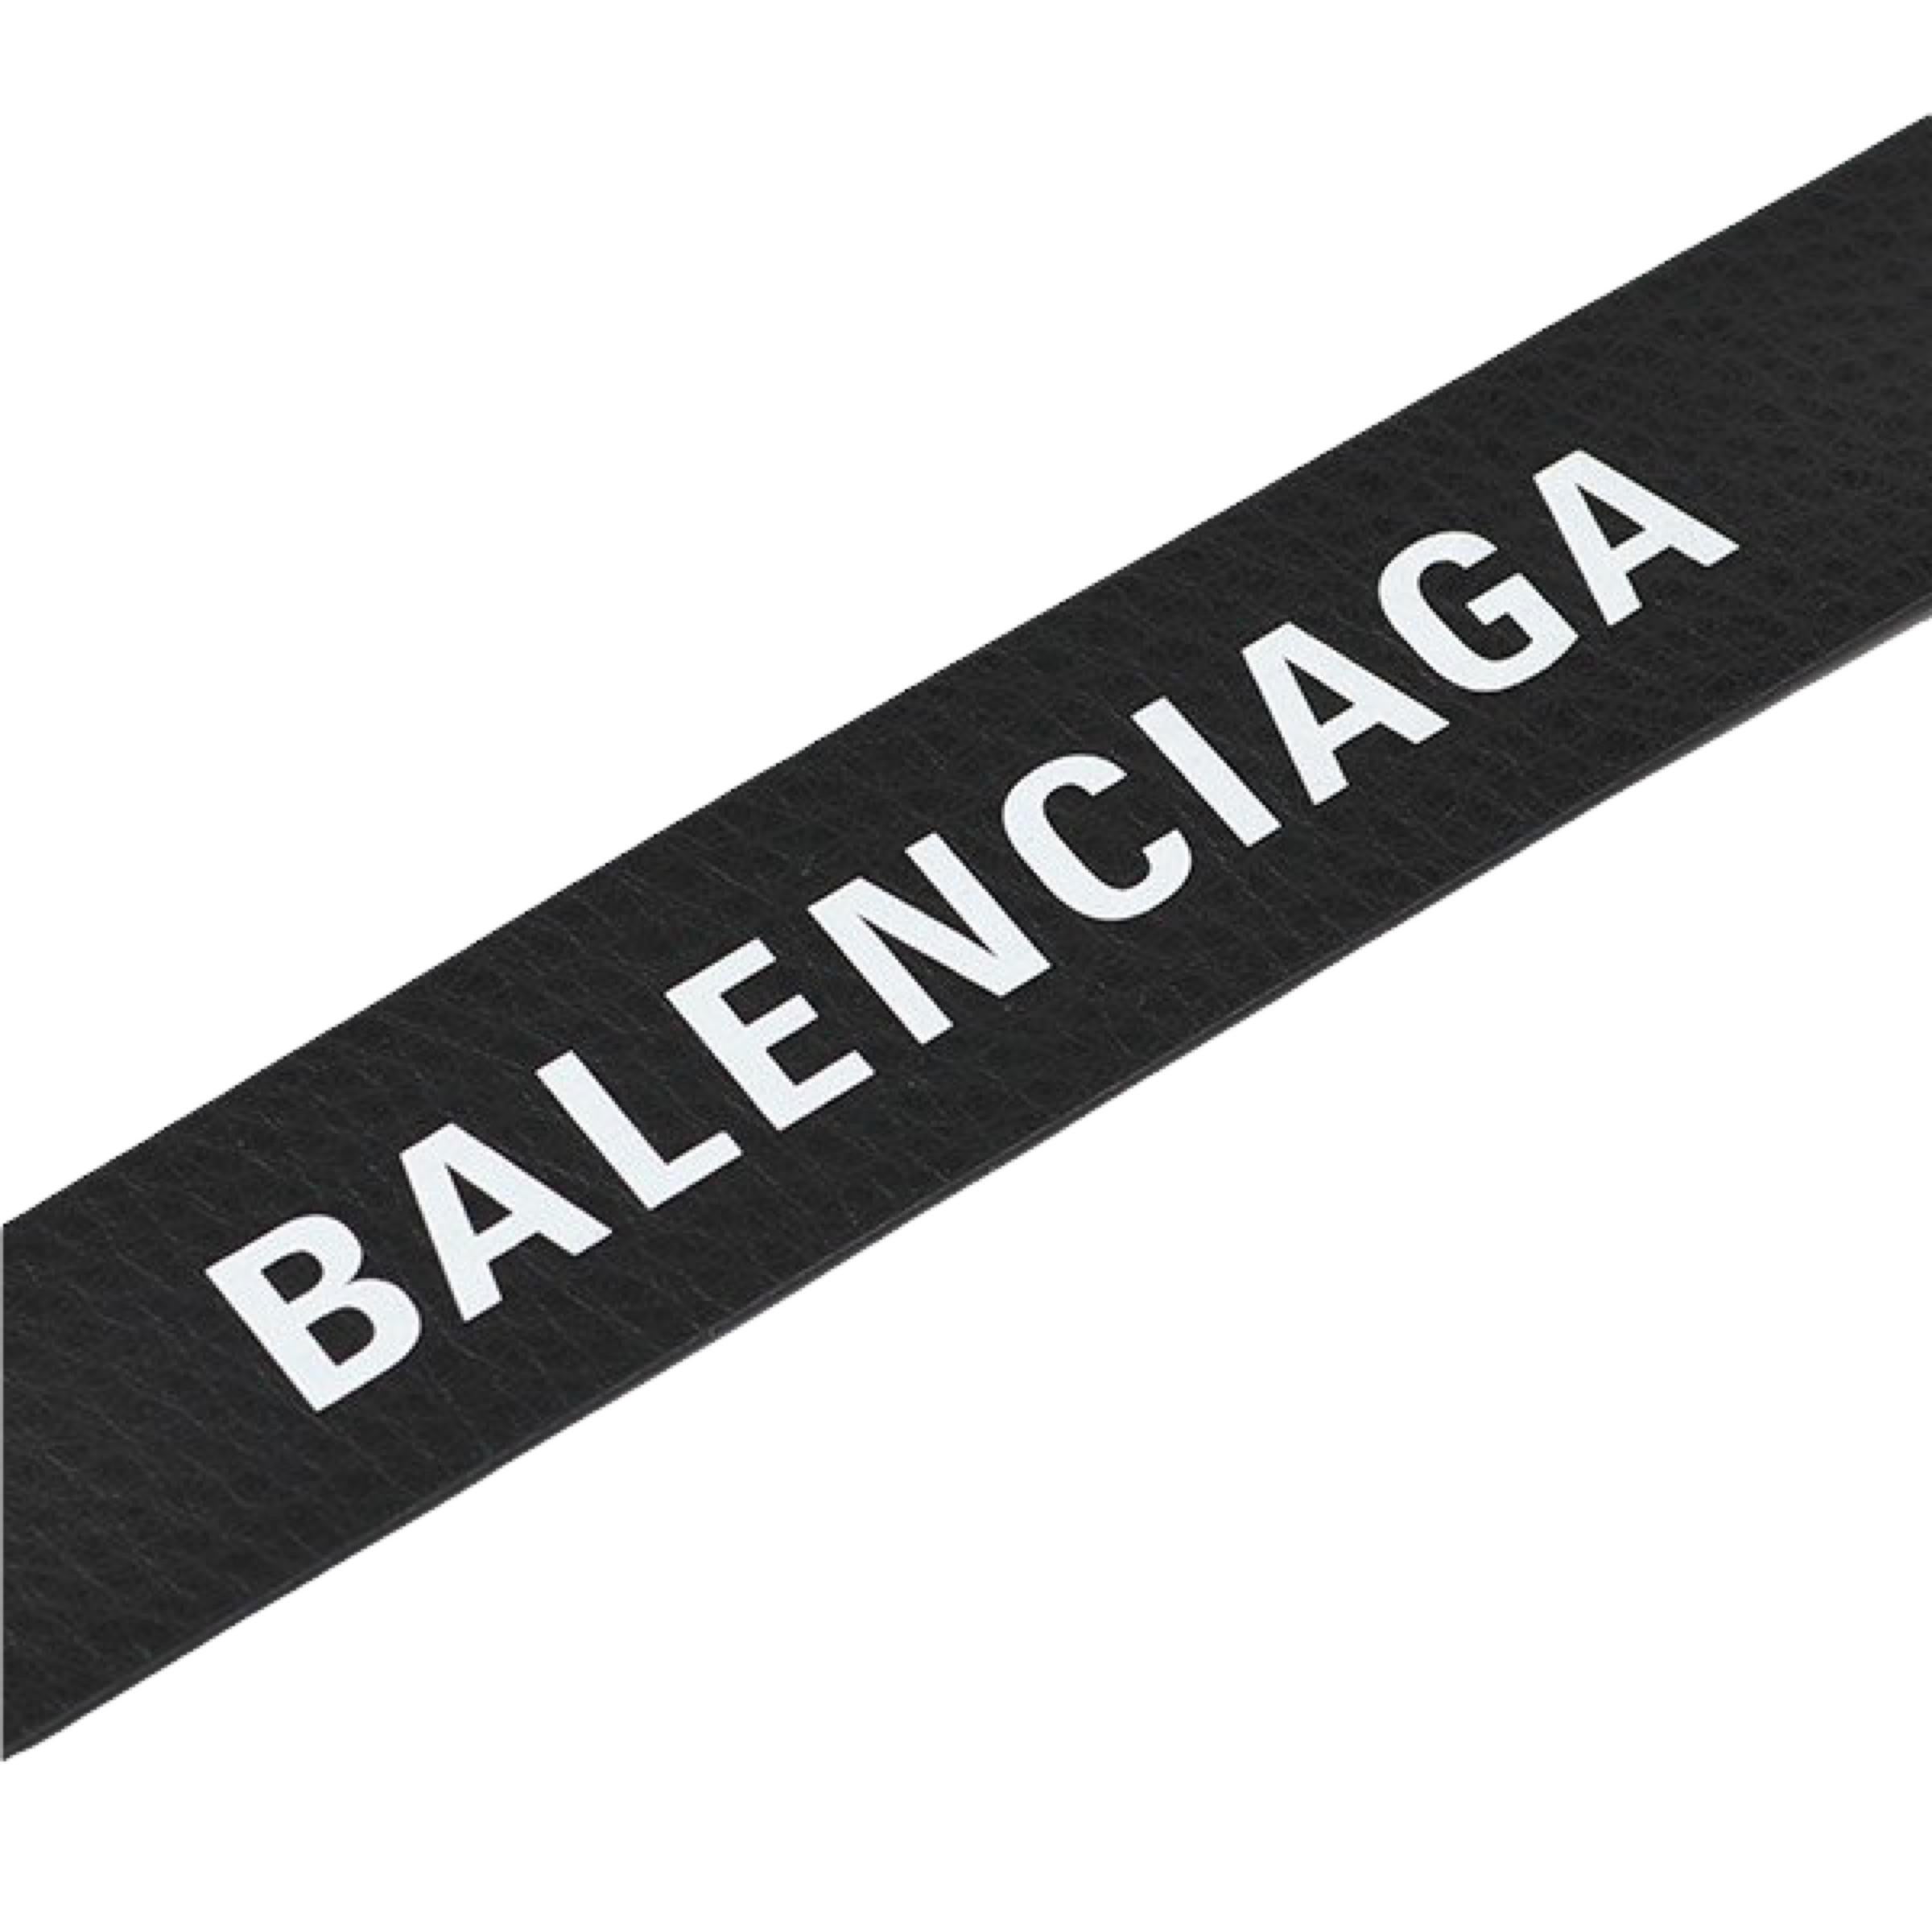 NEW Balenciaga Black Baltimore Printed Logo Leather Belt Size 90 EU For Sale 4